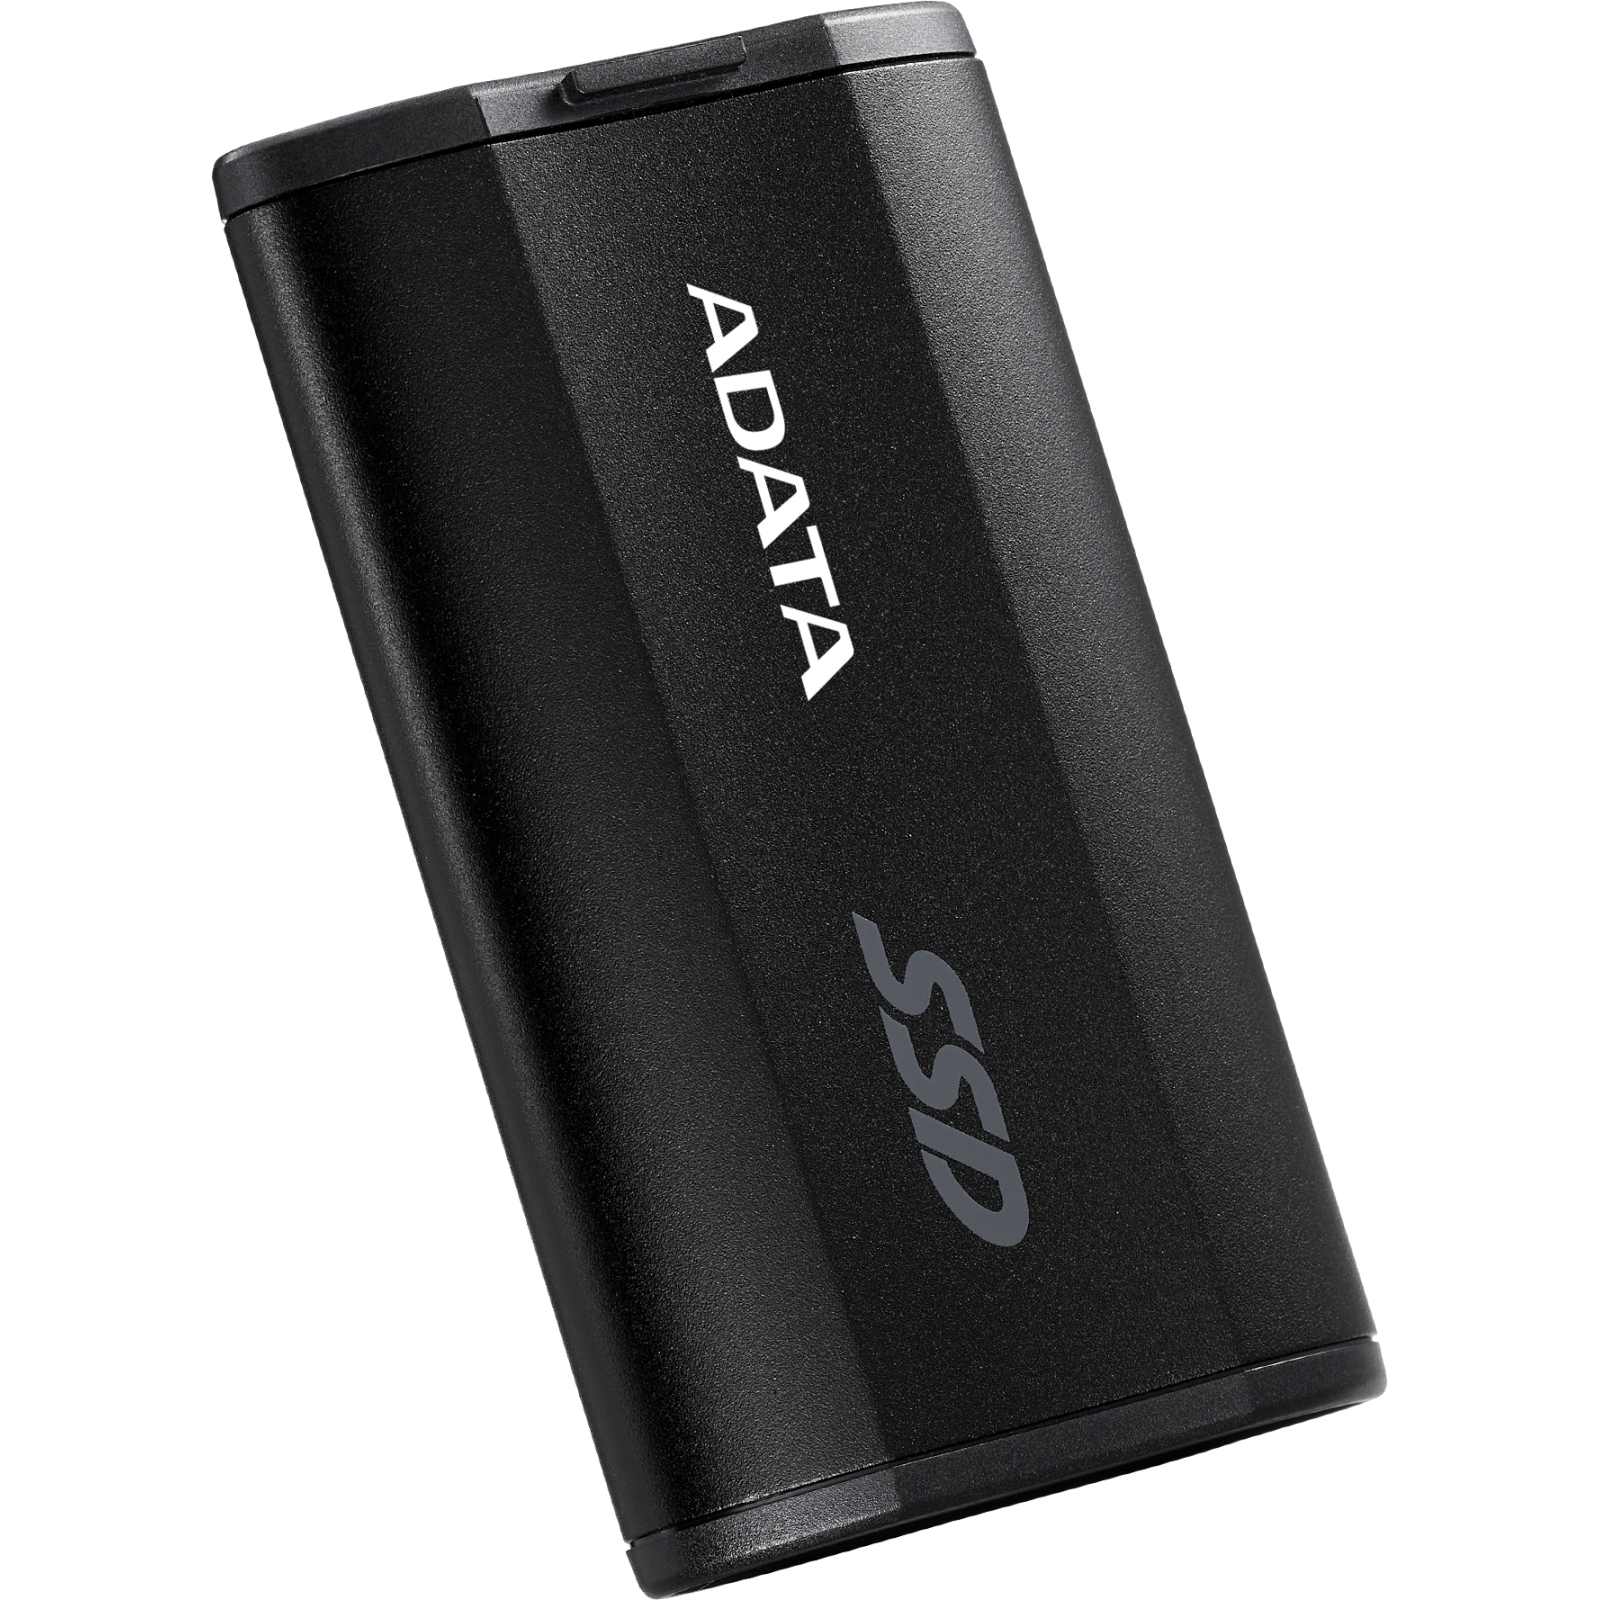 Накопитель SSD USB 3.2 4TB ADATA (SD810-4000G-CBK) изображение 3